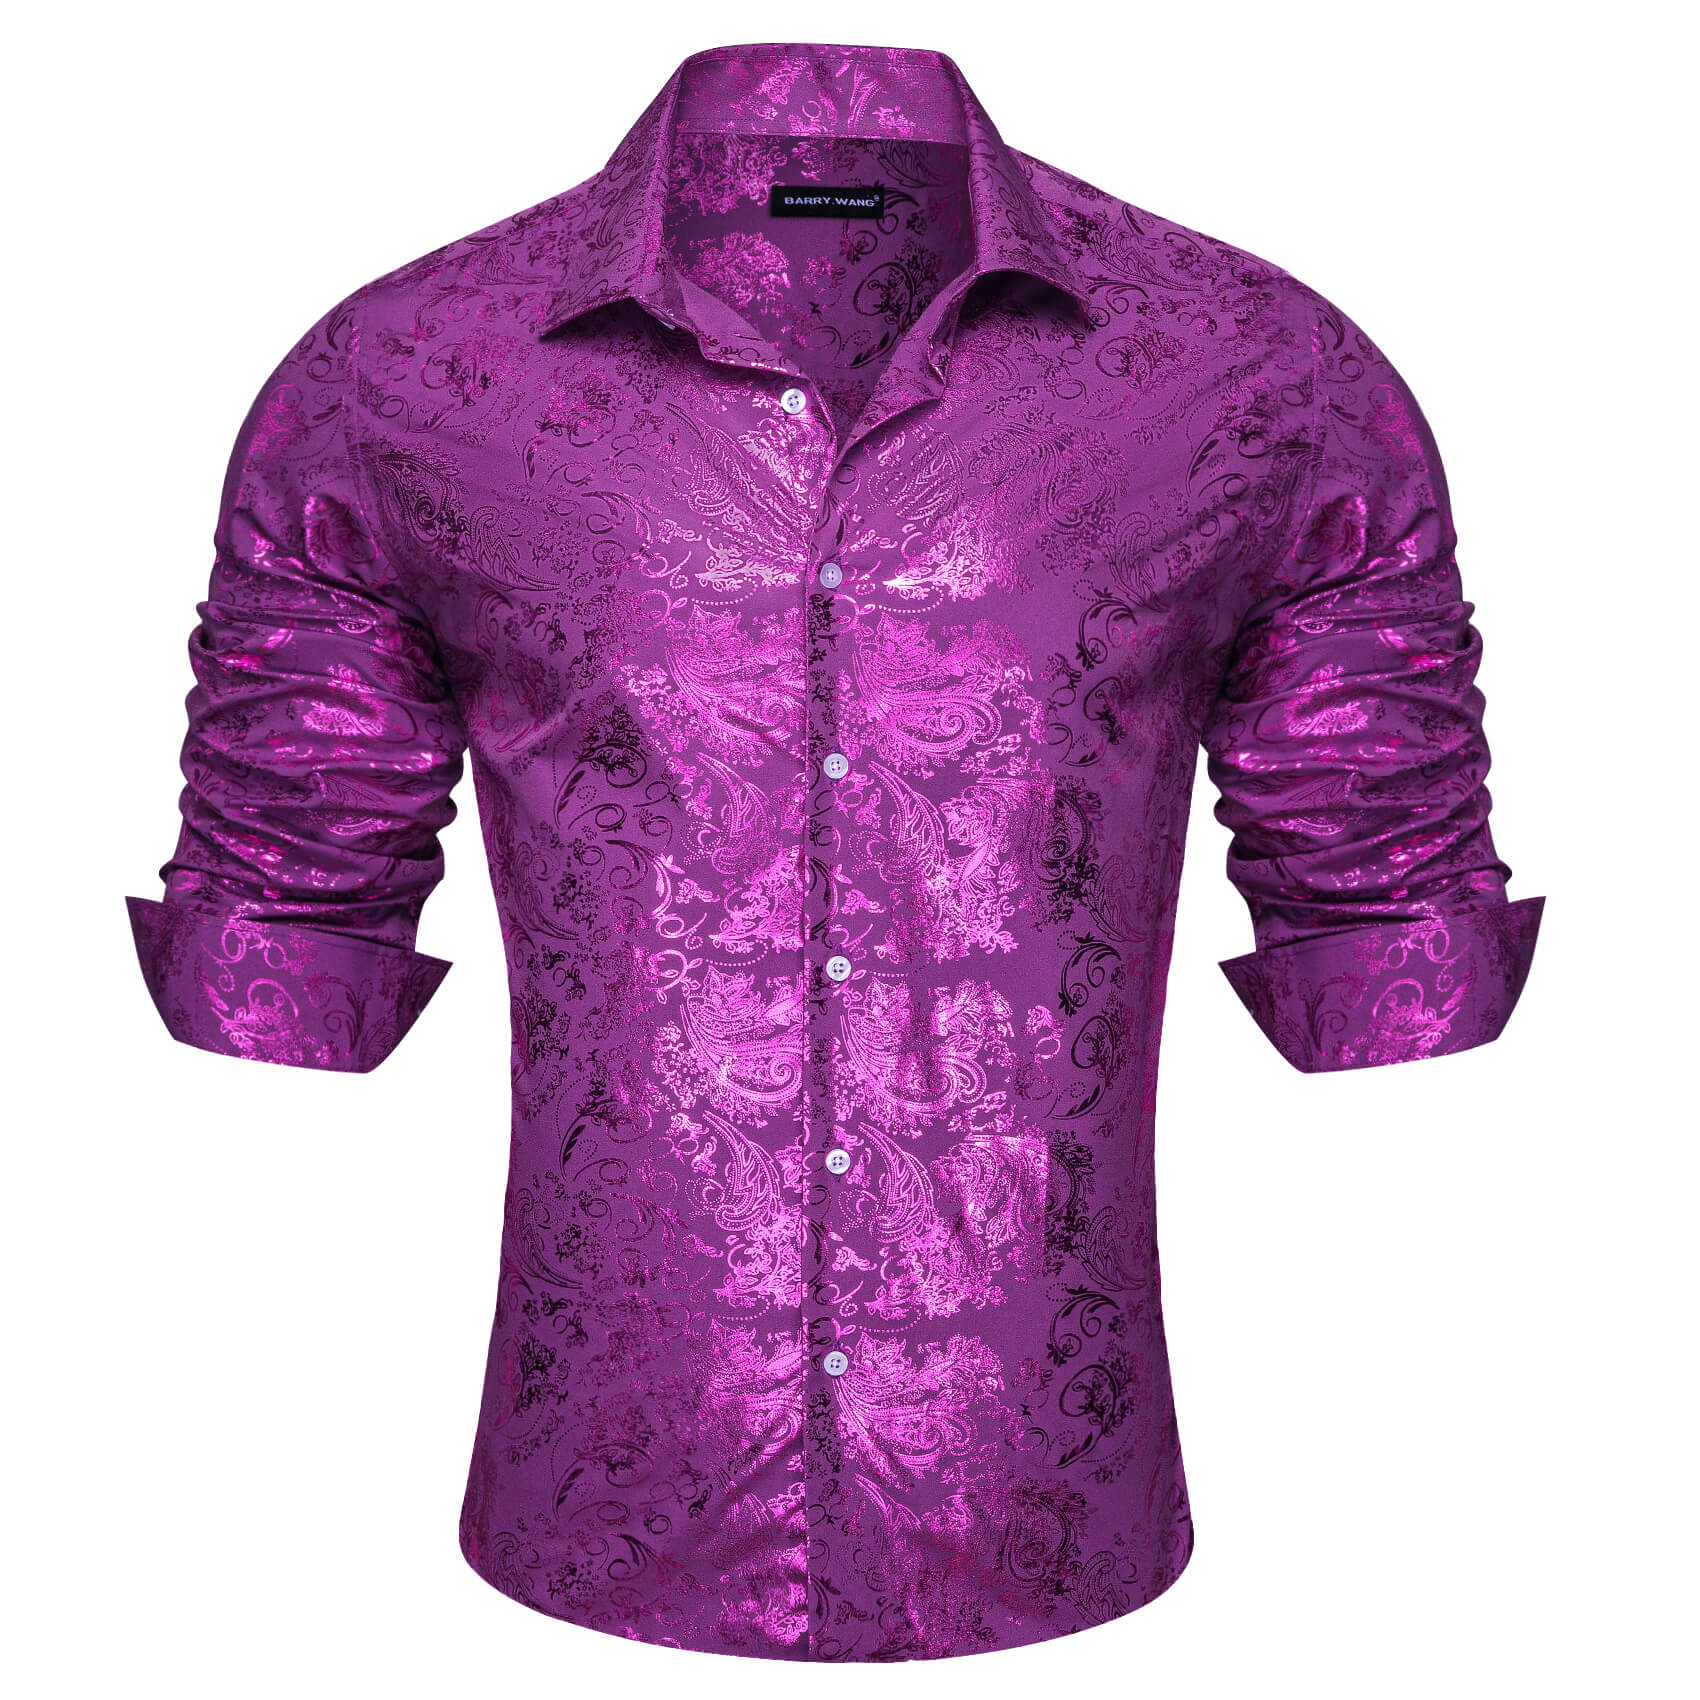 Barry.wang Men's Shirt Orchid Purple Bronzing Jacquard Floral Silk Shirt